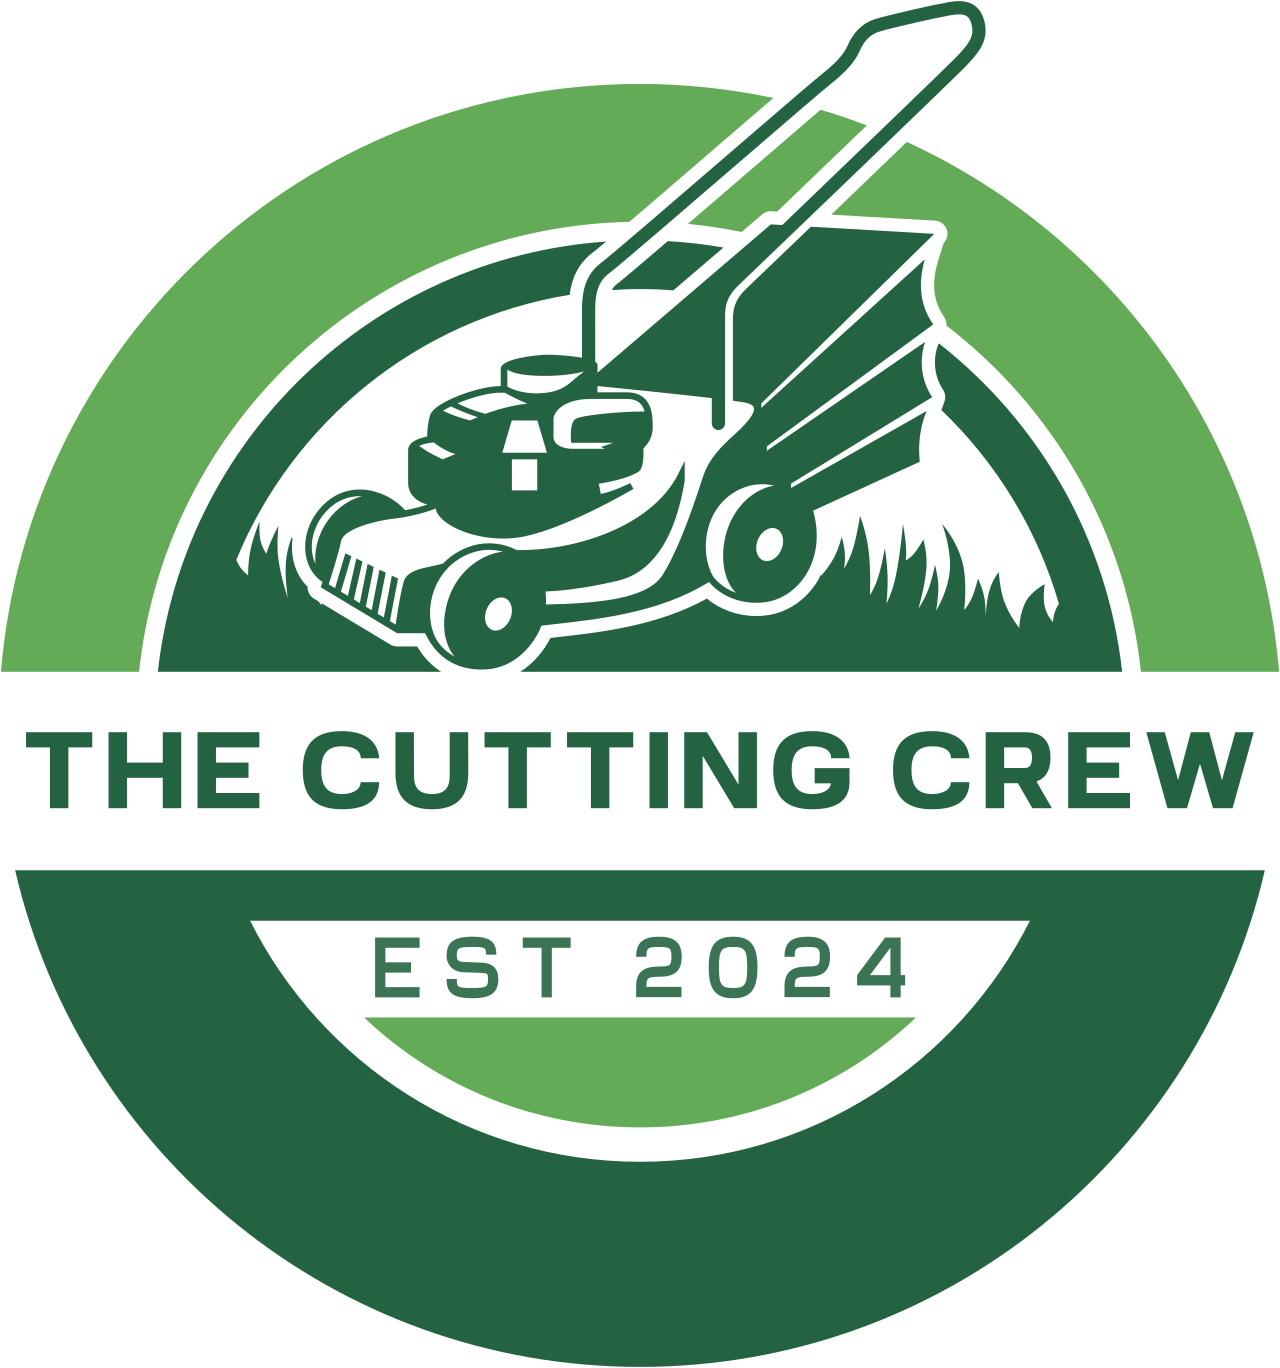 The Cutting Crew's logo